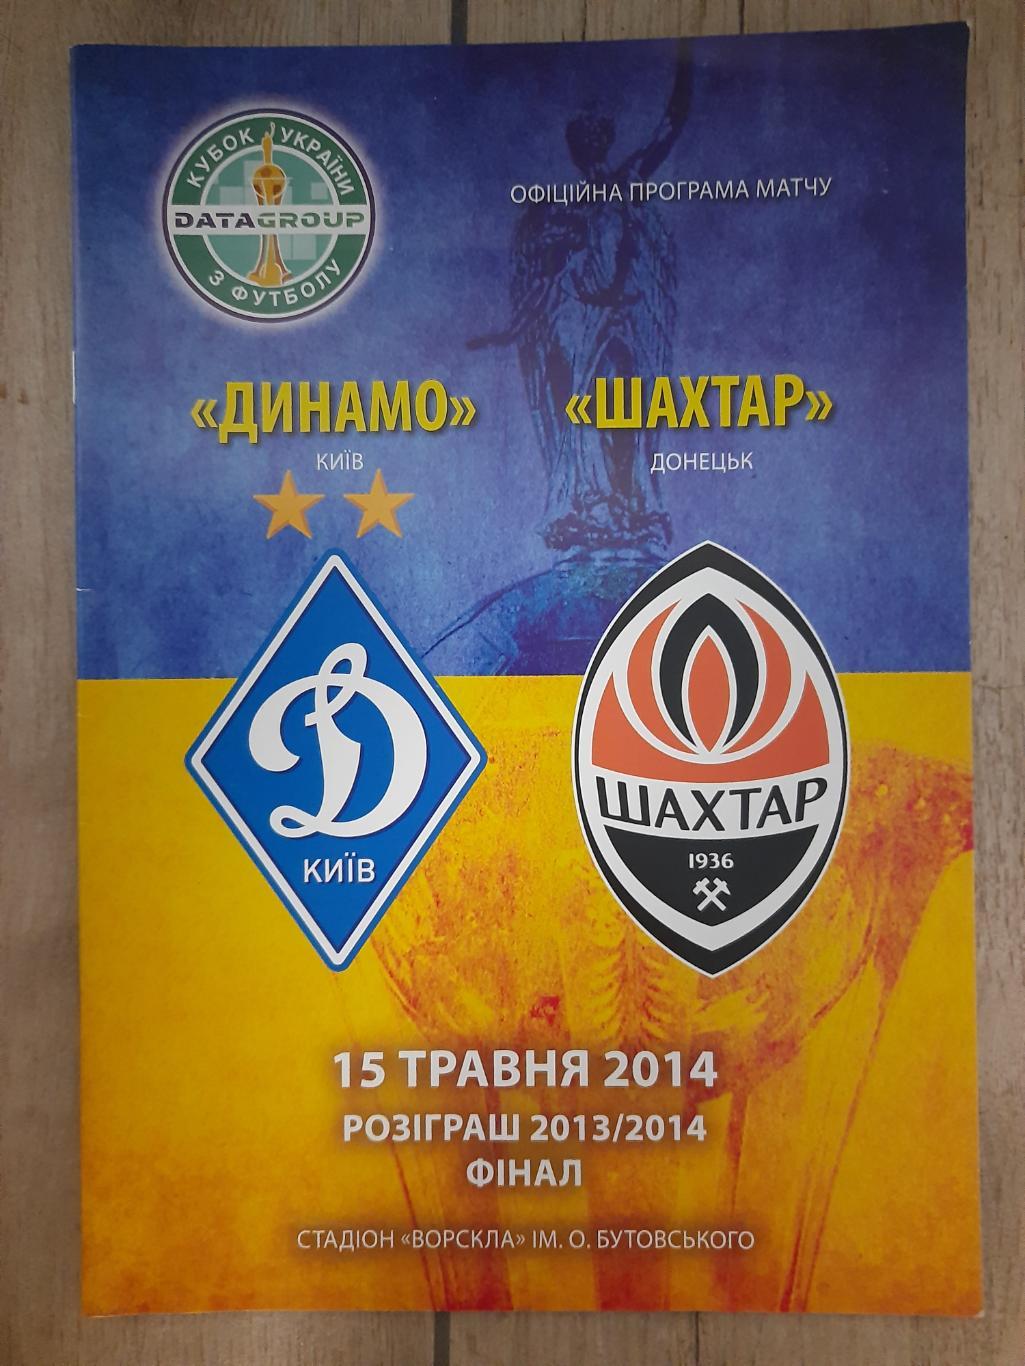 Динамо Киев - Шахтер Донецк 15.05.2014, финал кубка.